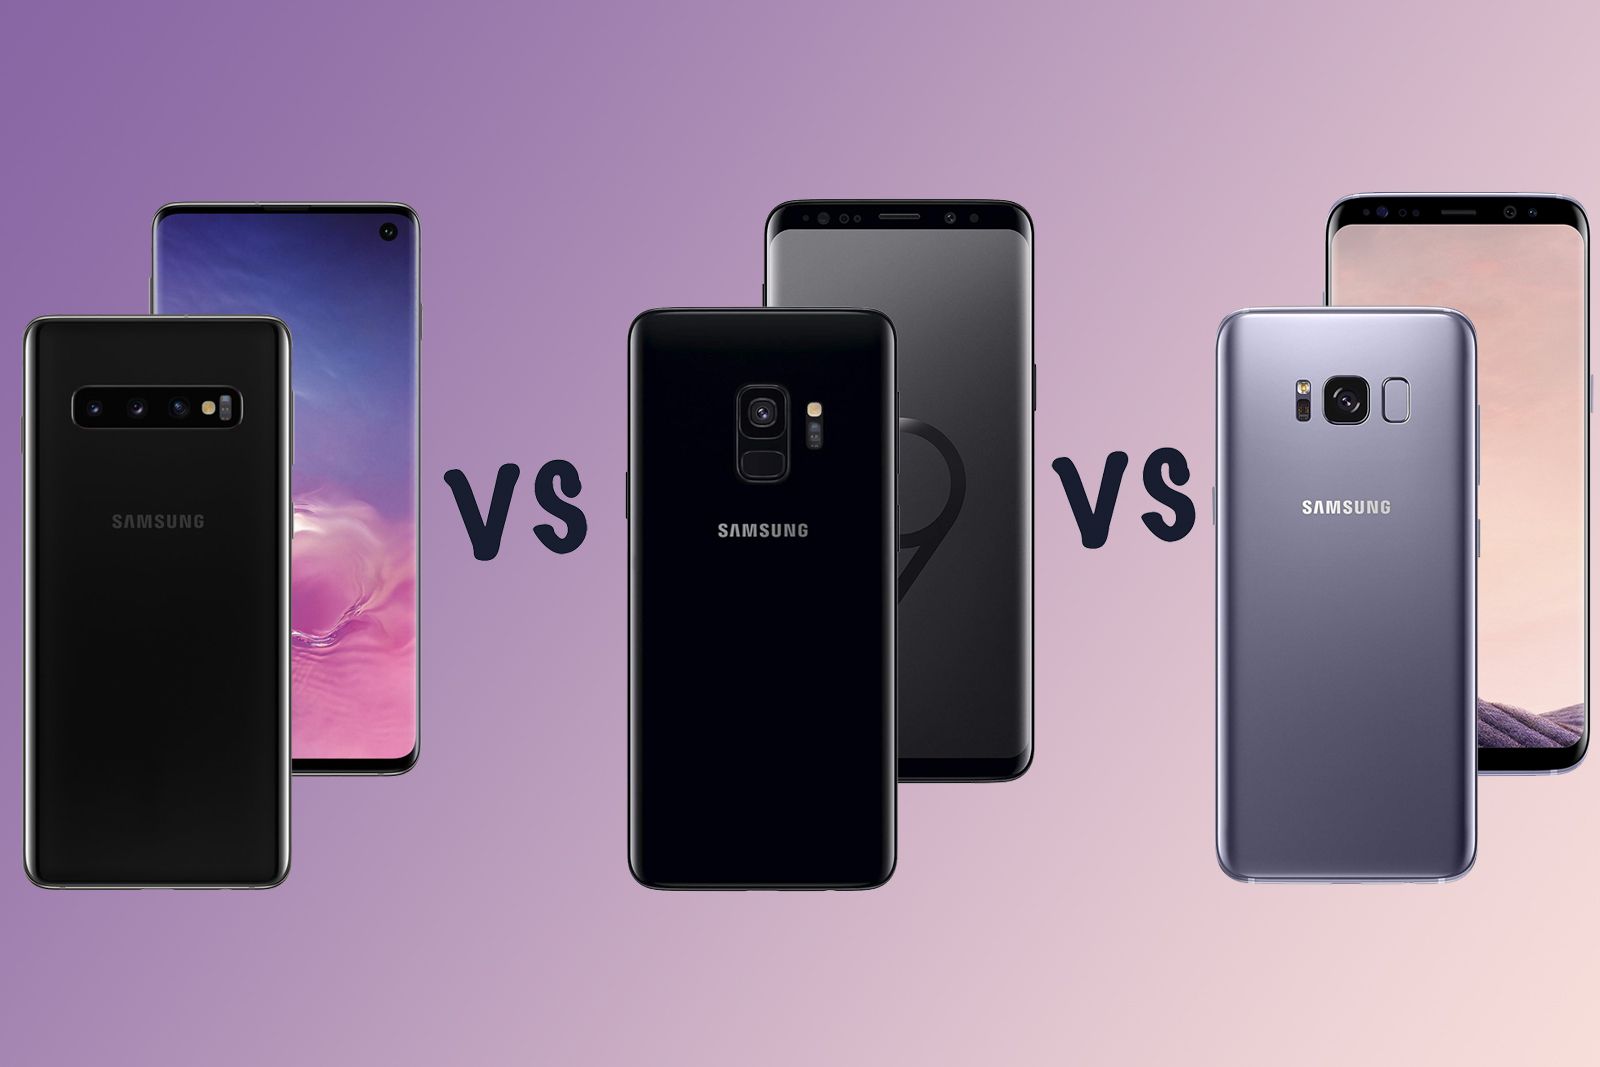 Samsung Galaxy S10 vs S9 vs S8 Worth the upgrade image 1